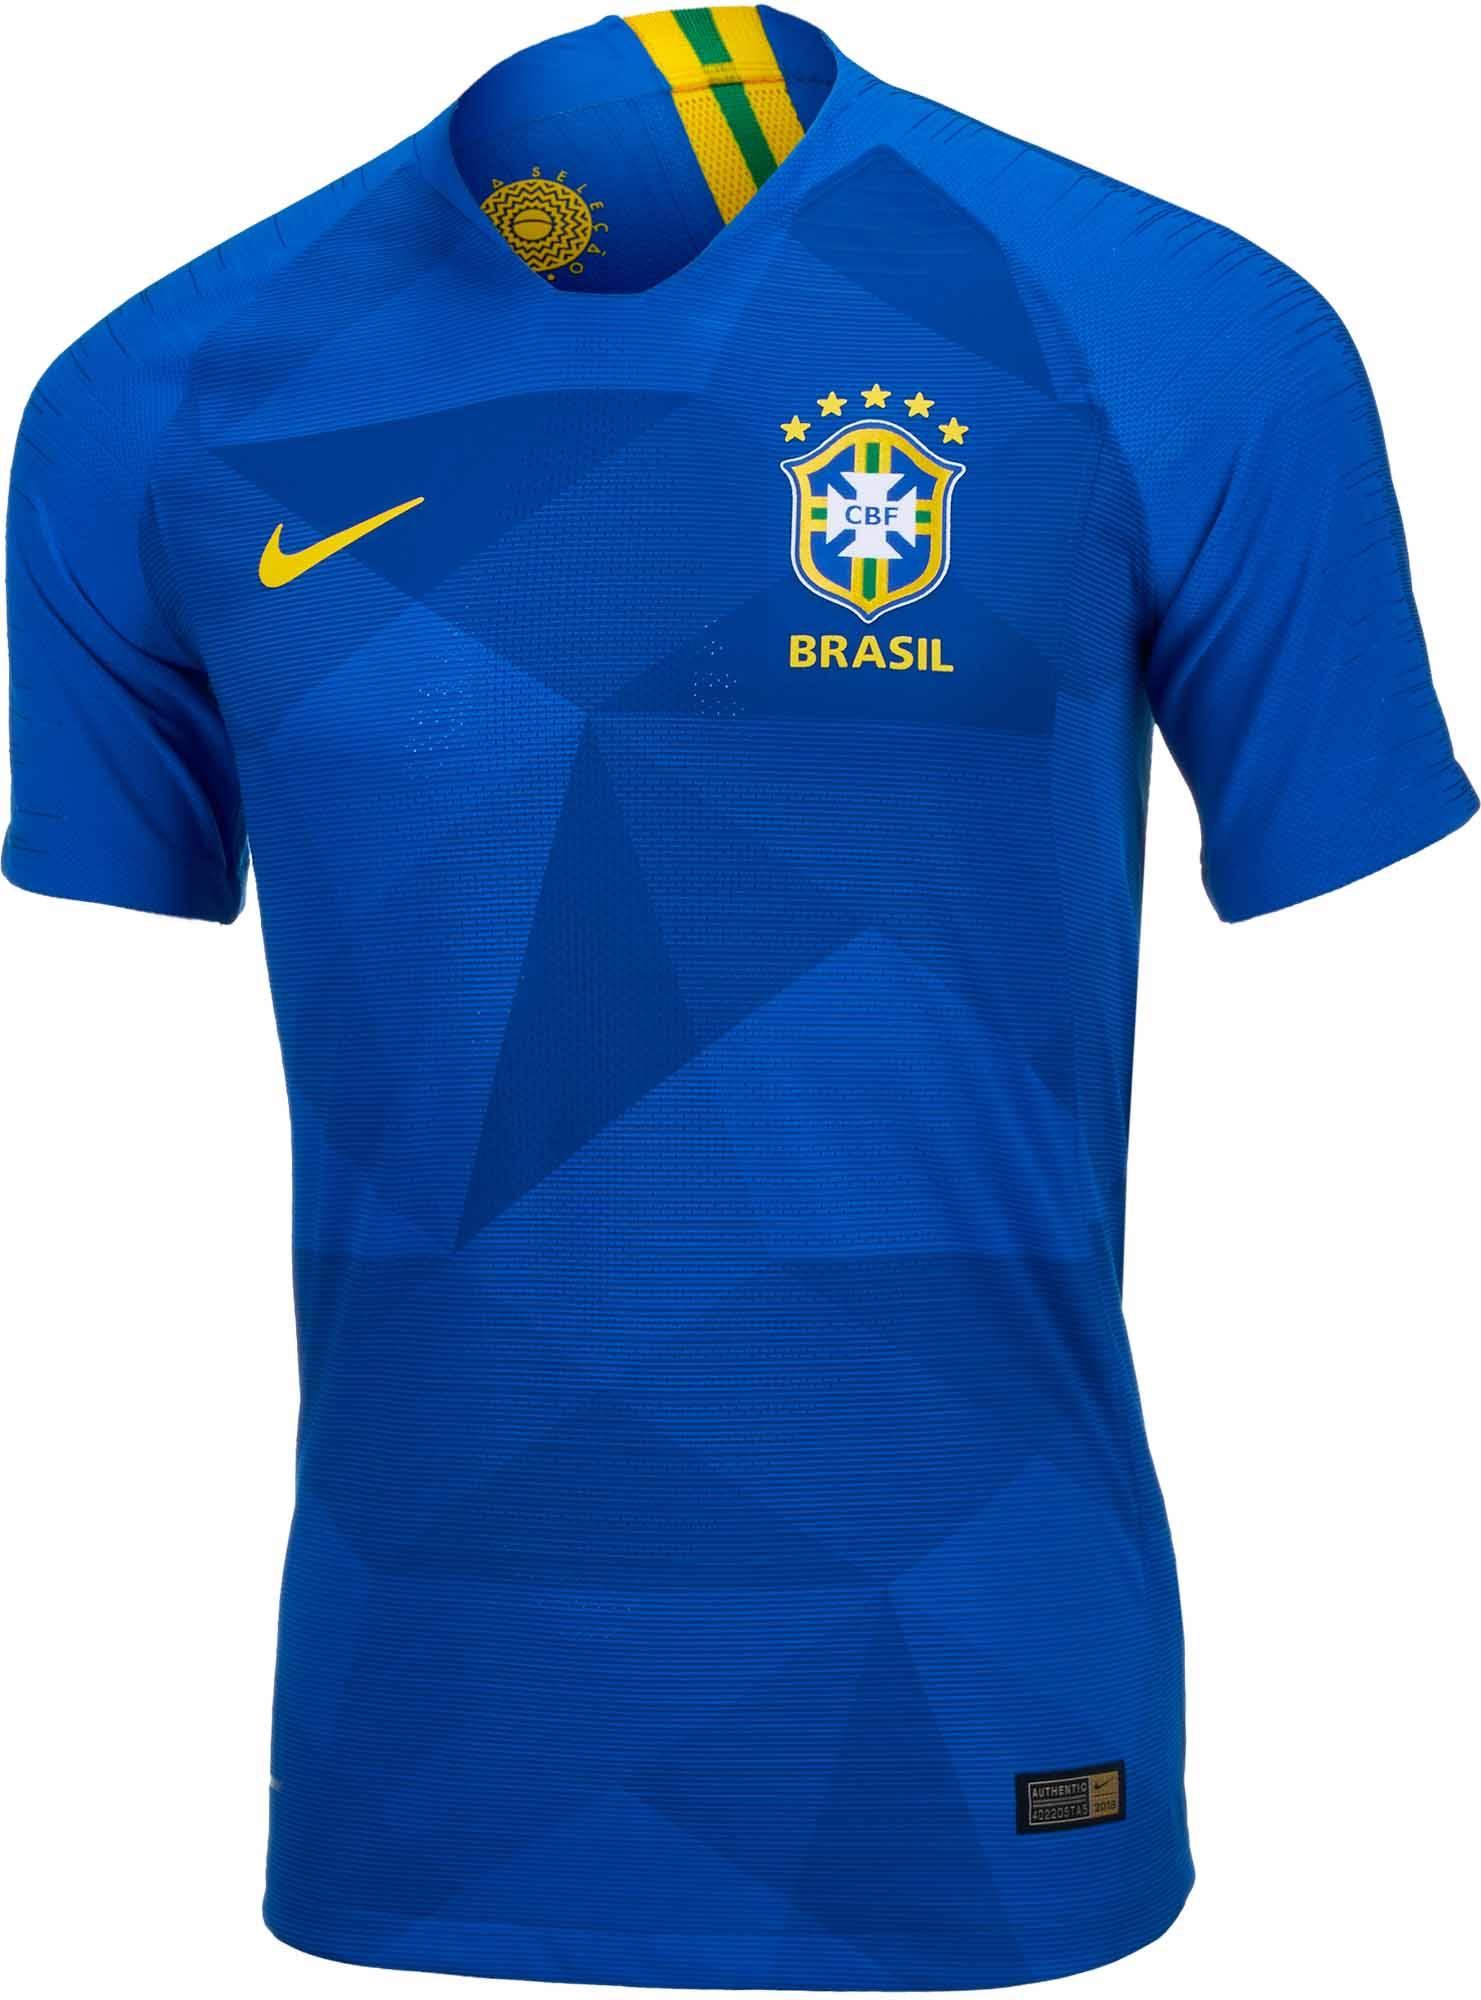 Fuerza Villano Pionero Nike Brazil Away Match Jersey 2018-19 - SoccerPro